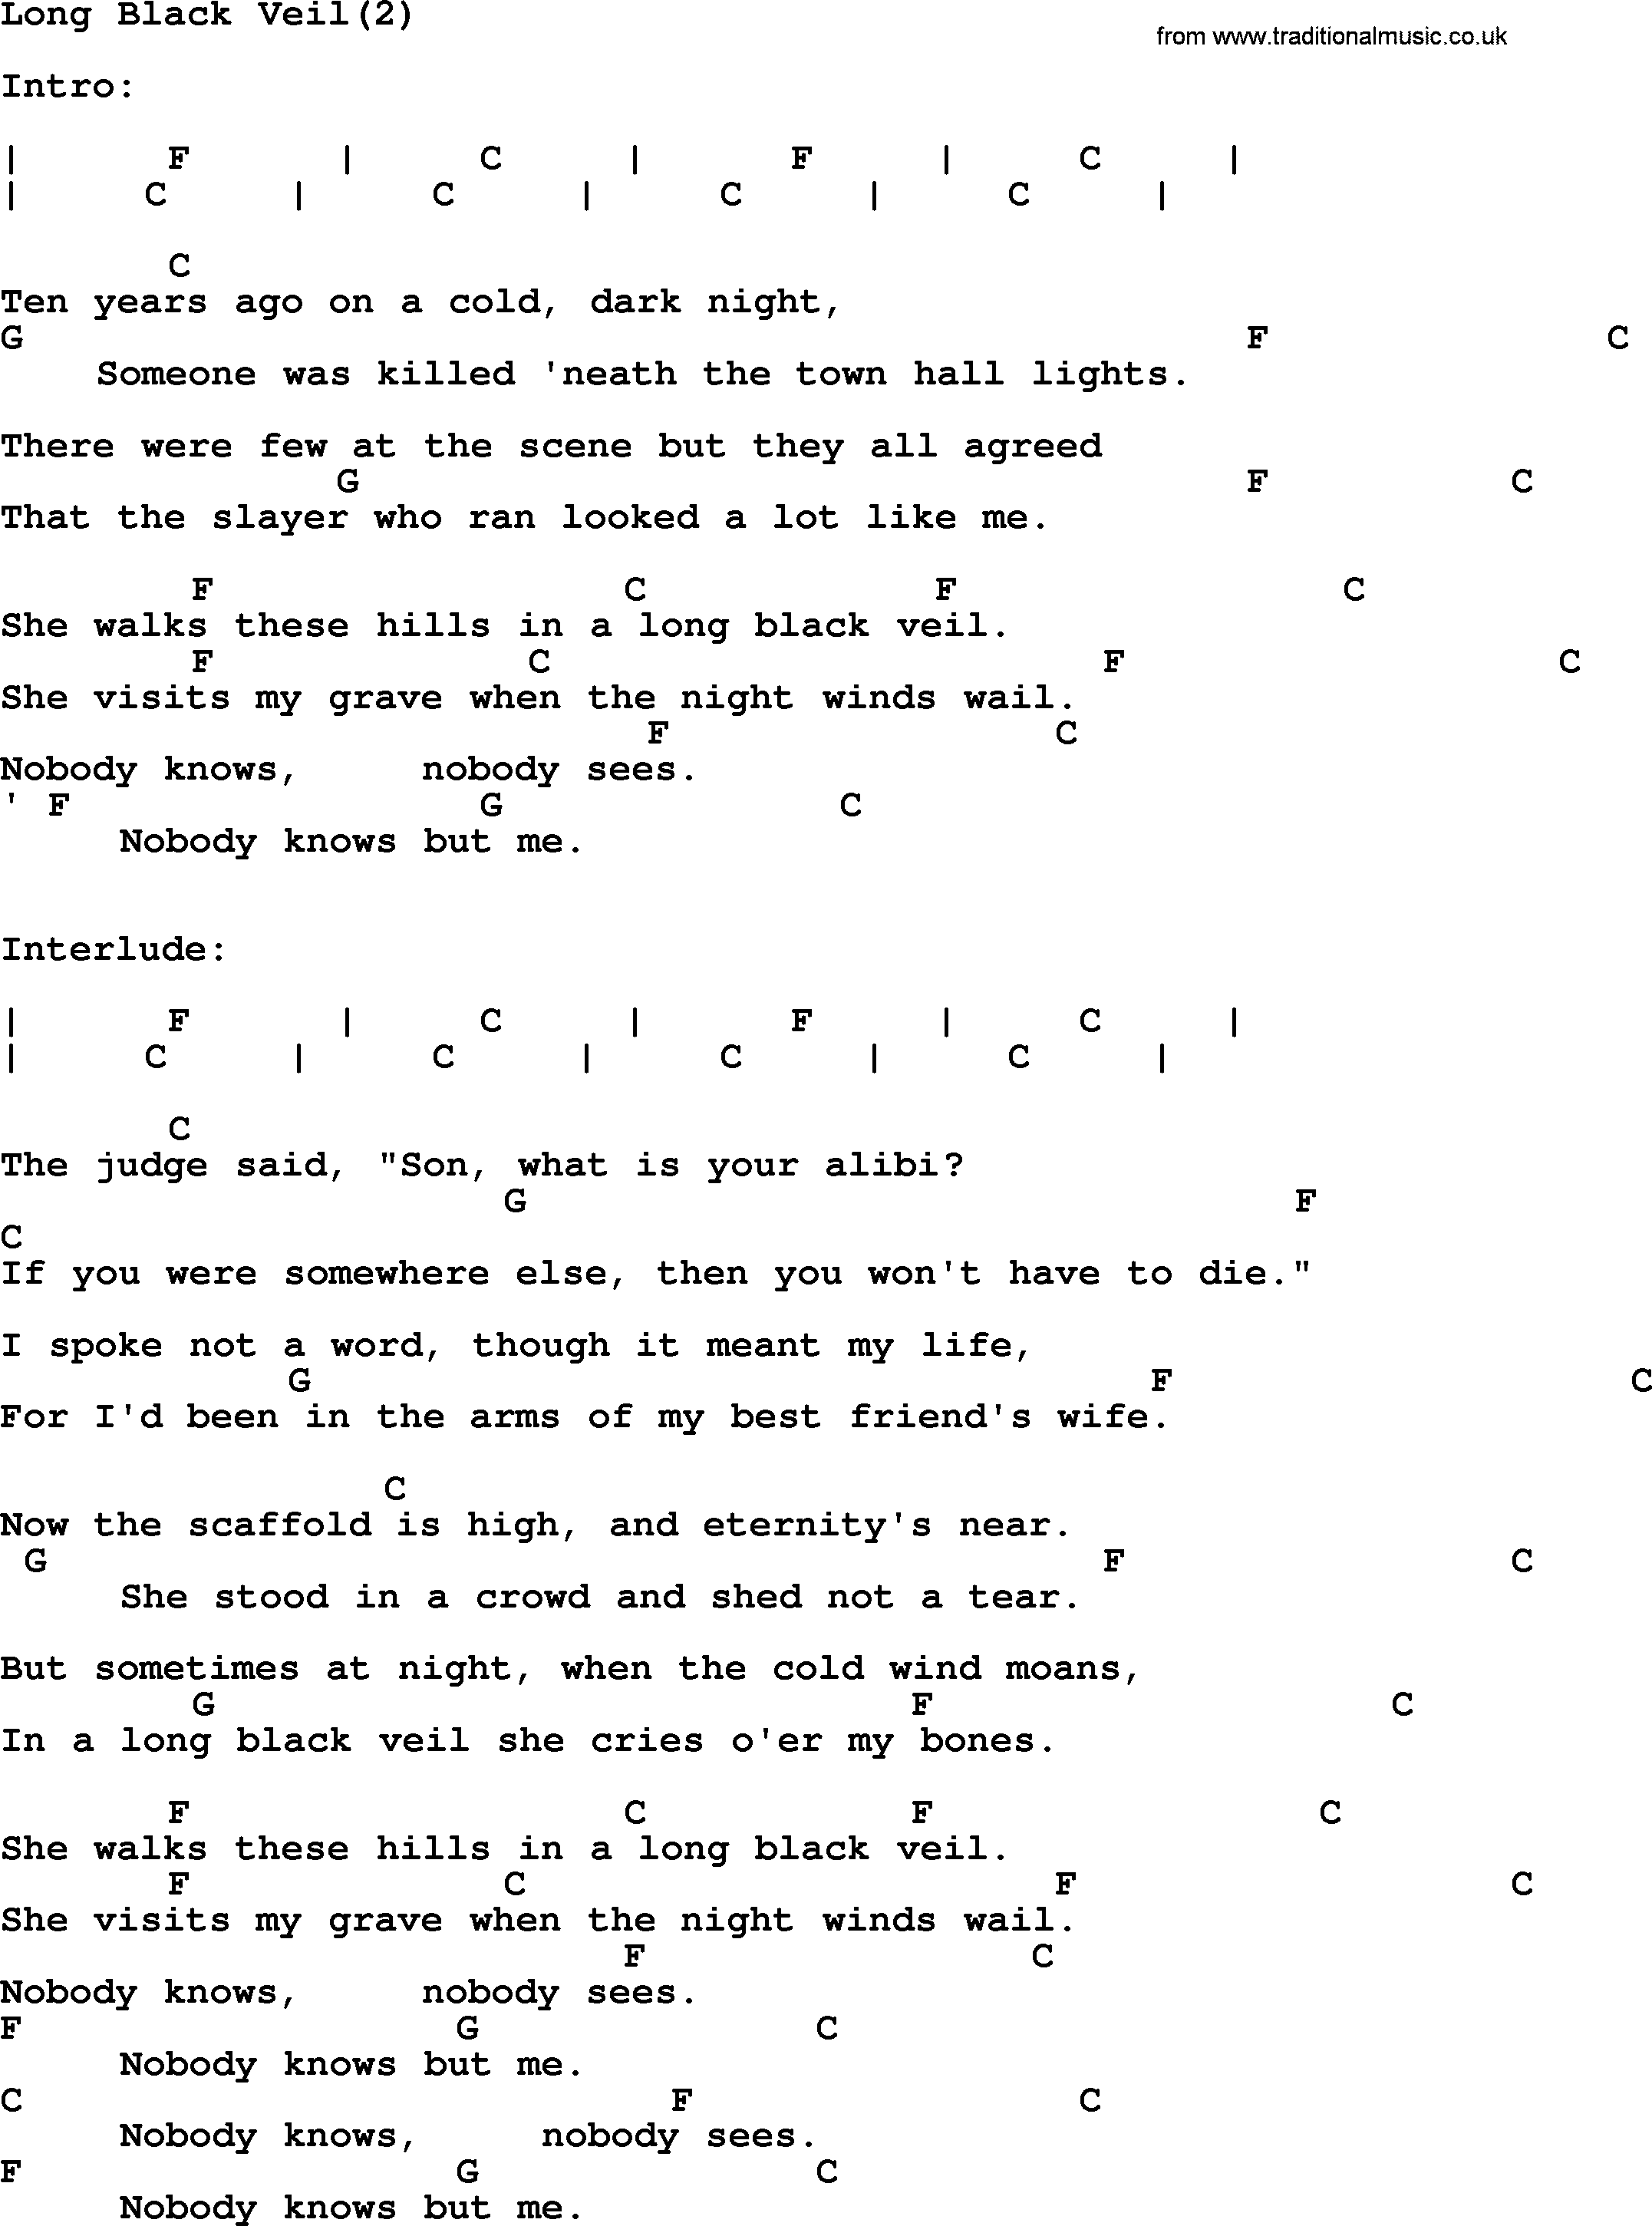 Johnny Cash song Long Black Veil(2), lyrics and chords